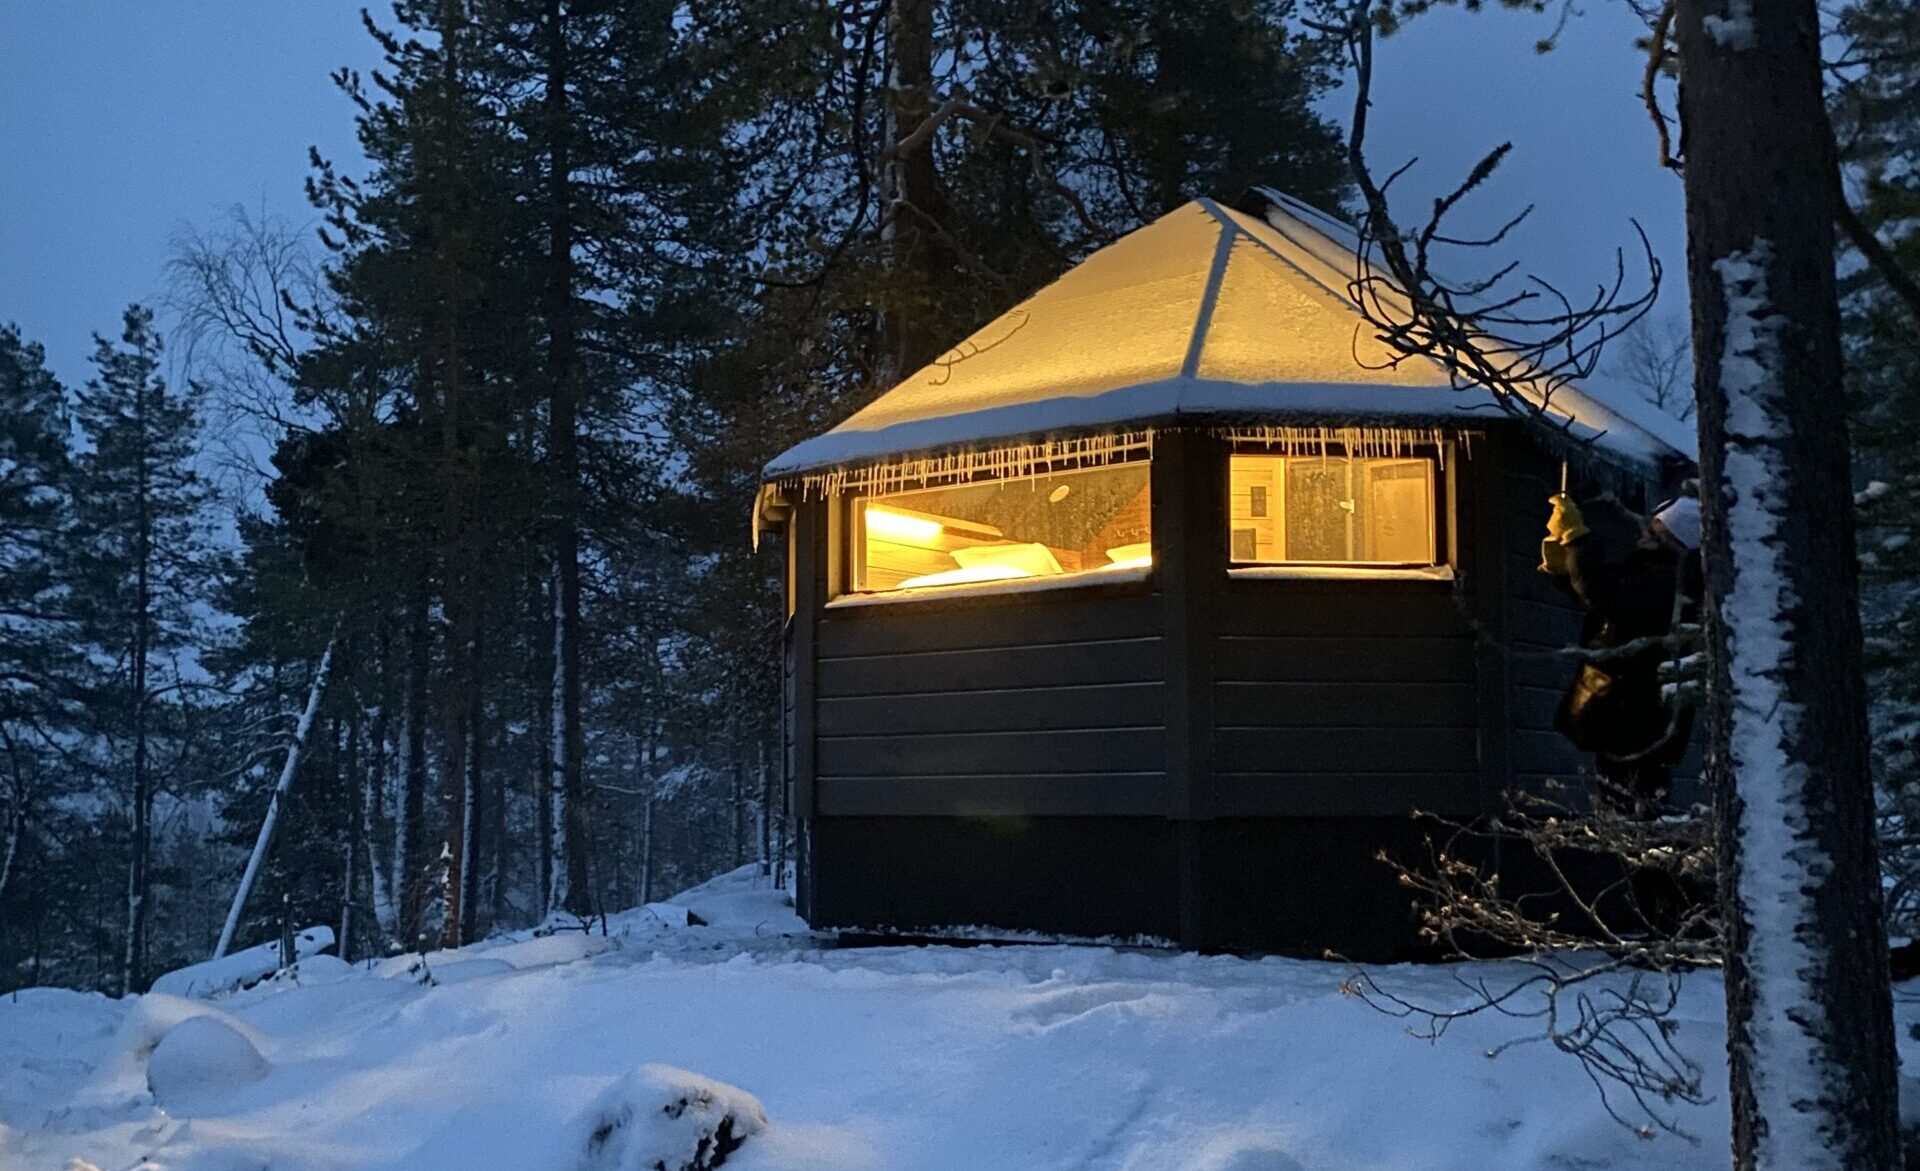 Octola Private Wilderness, Lapland